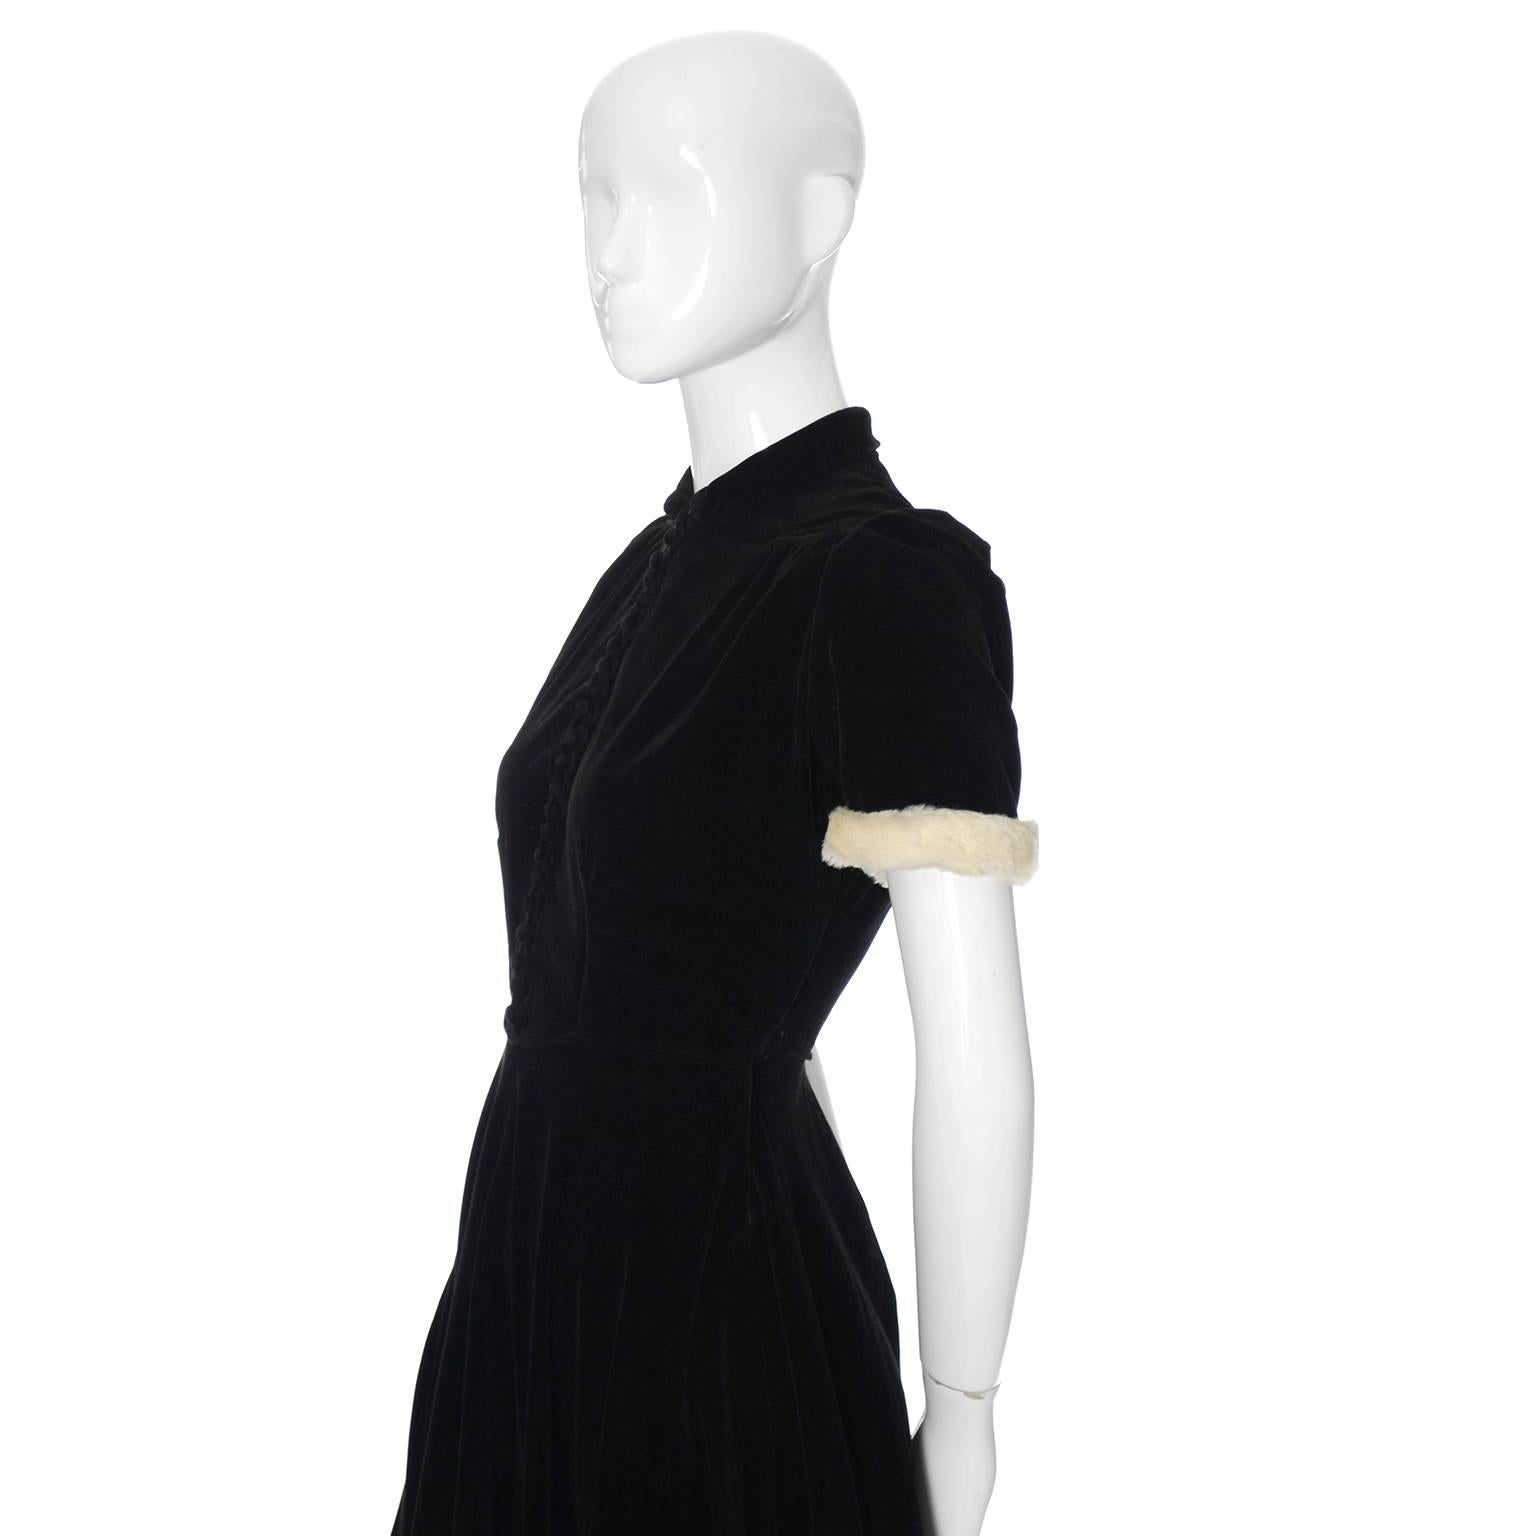 1940s black dress